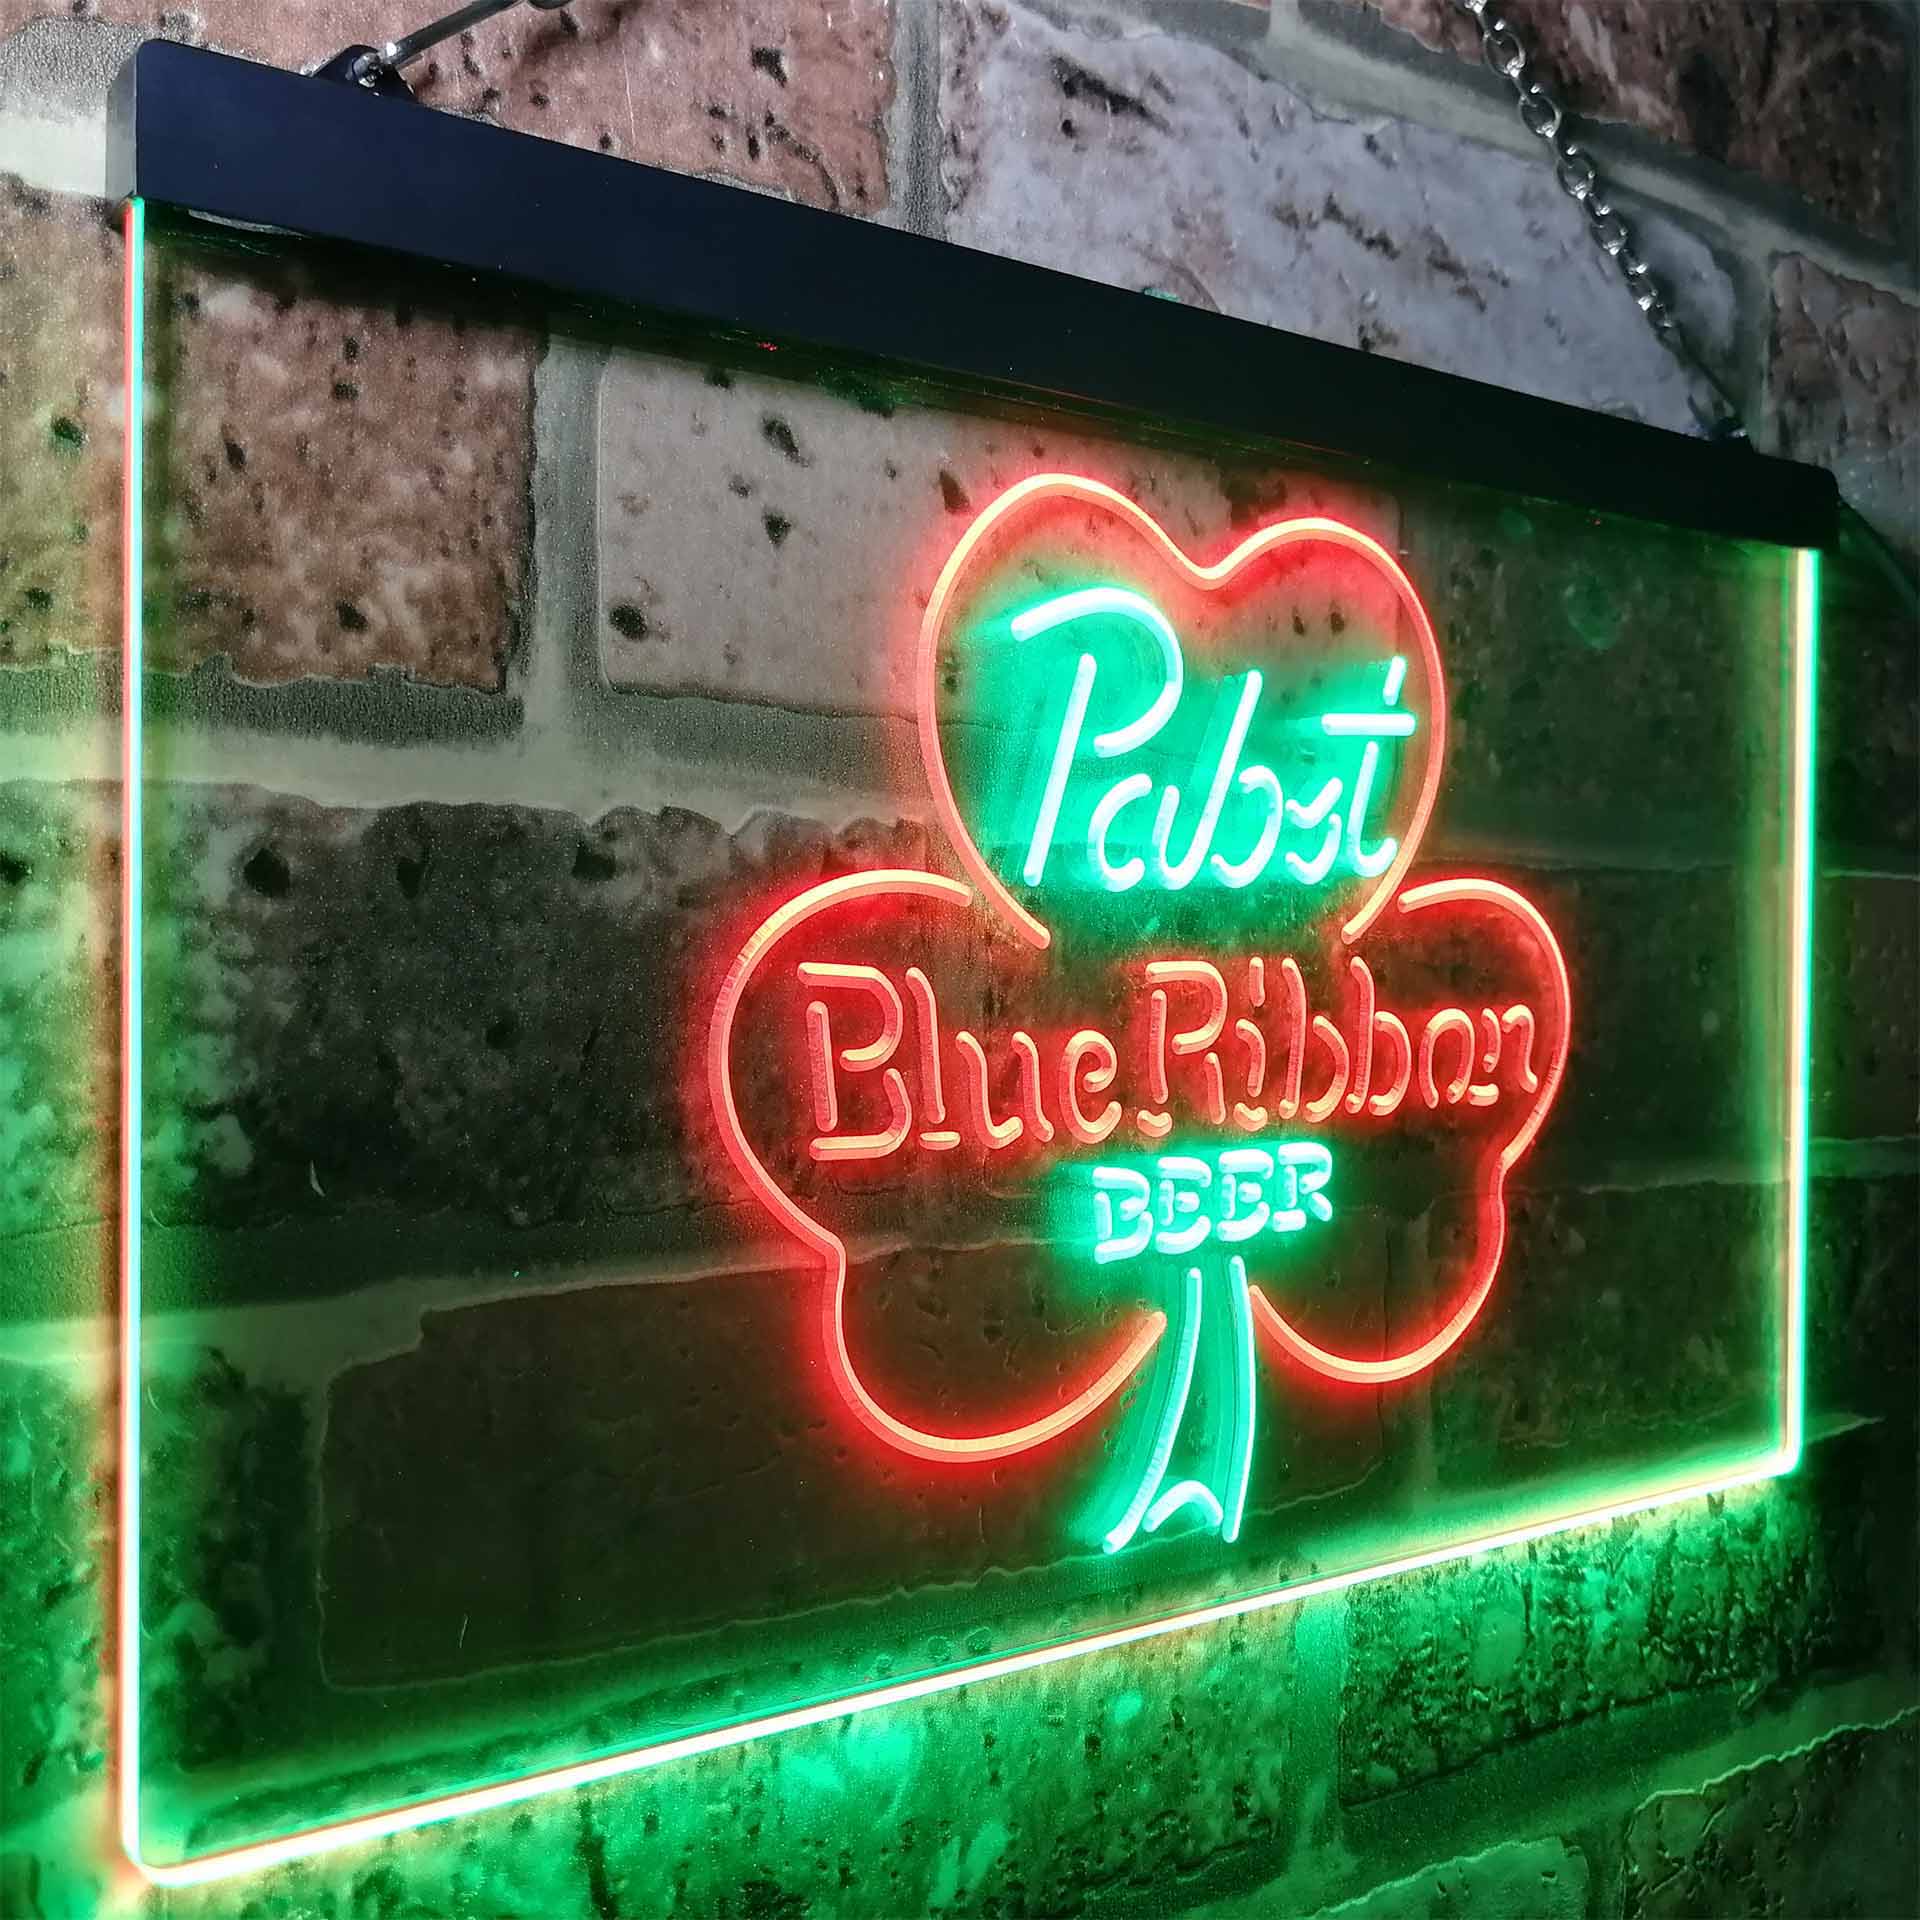 Pabst Blue Ribbon Beer Bar Neon LED Sign